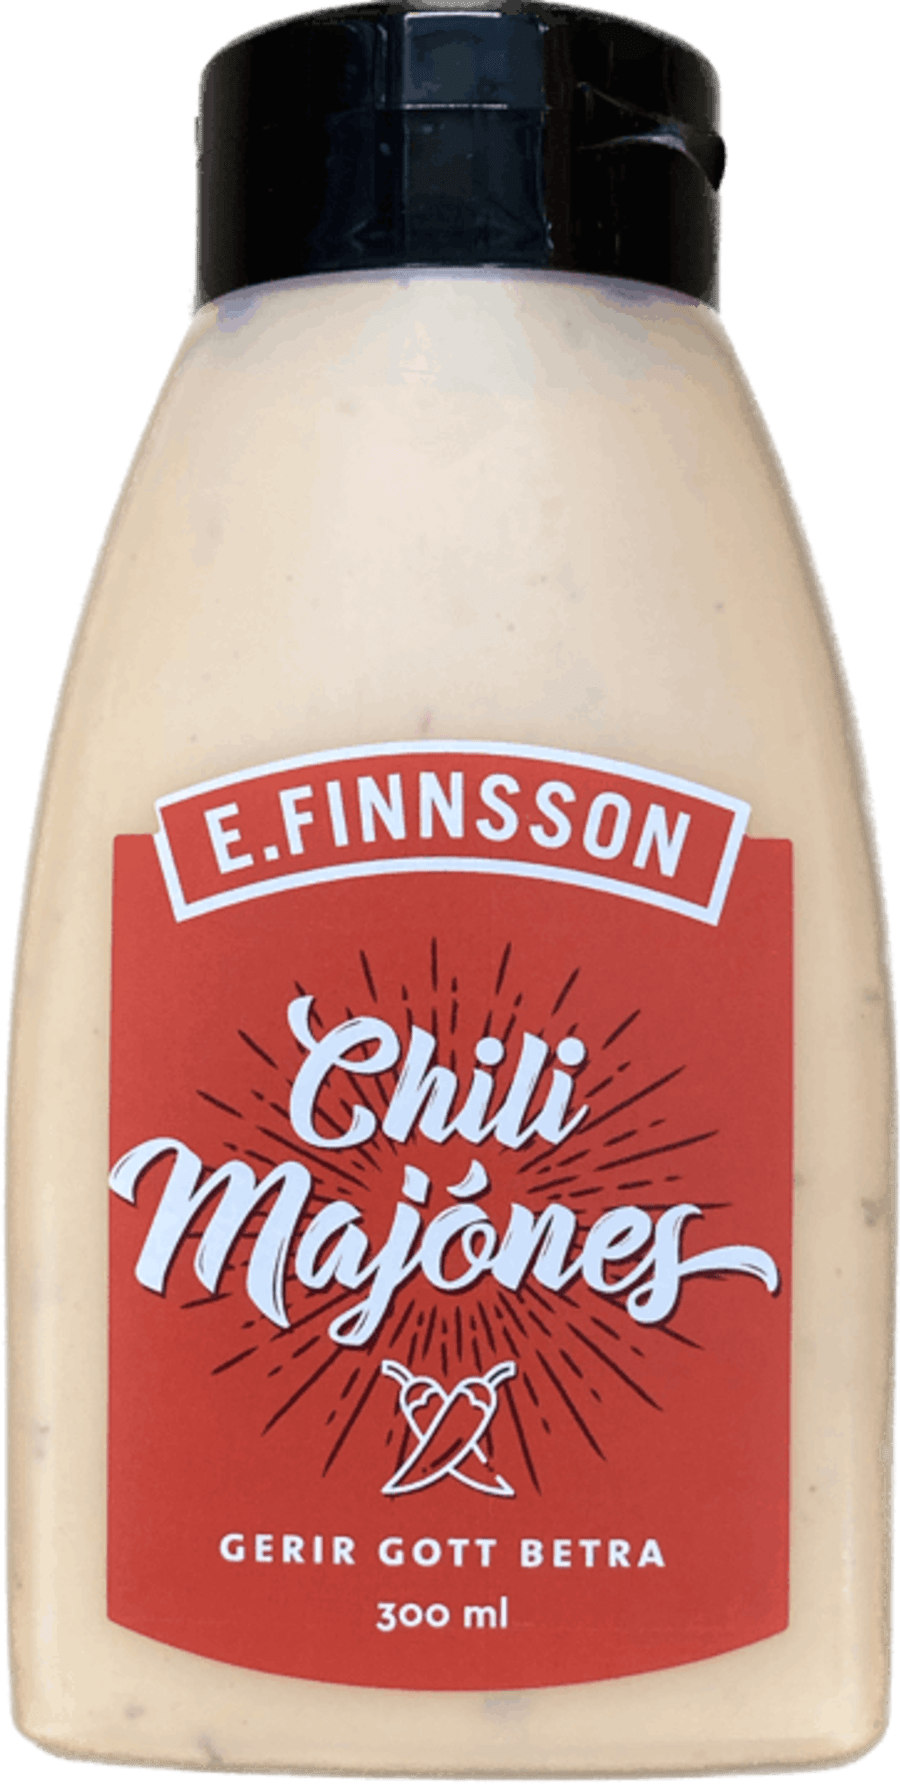 E.finnsson sósa chilli majones 300 ml